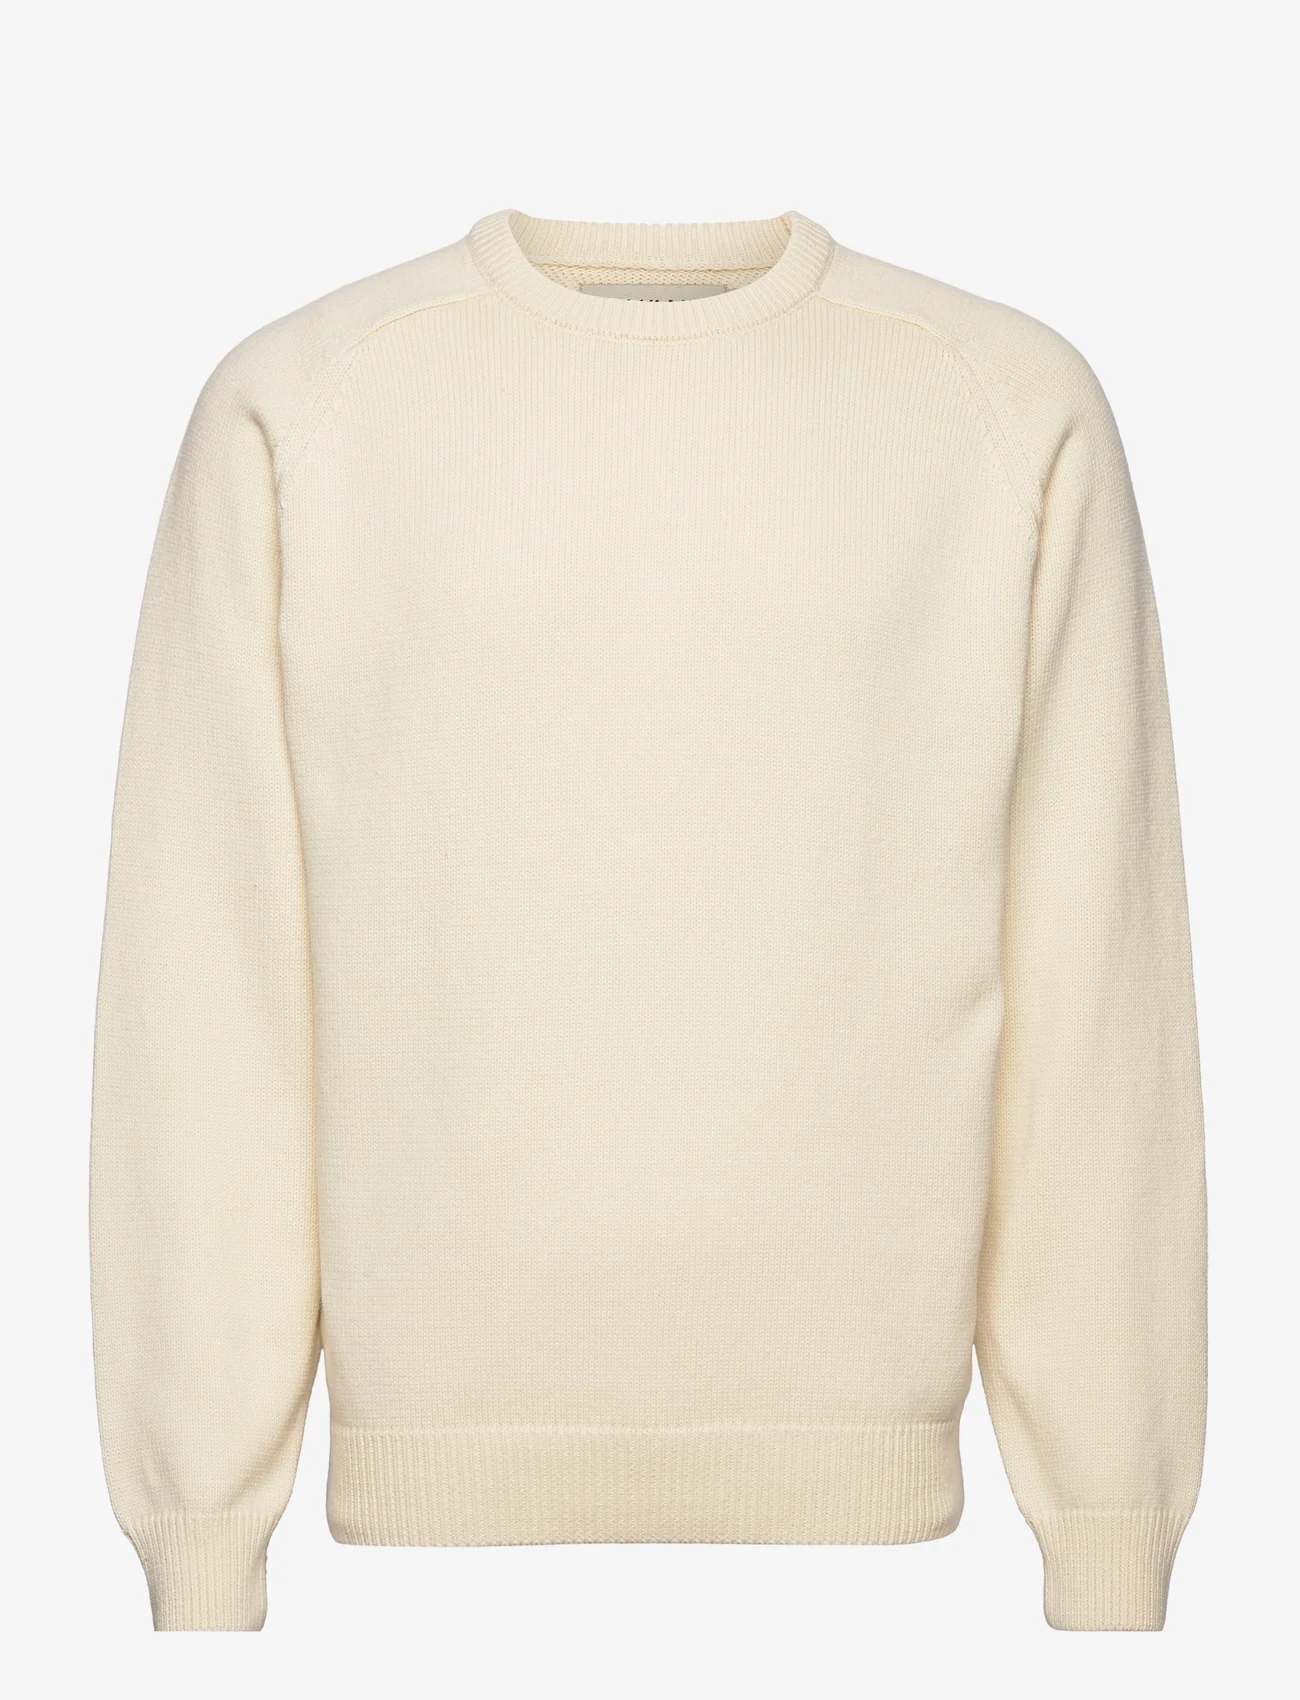 Taikan - Knit Sweater-Cream - basic gebreide truien - cream - 0